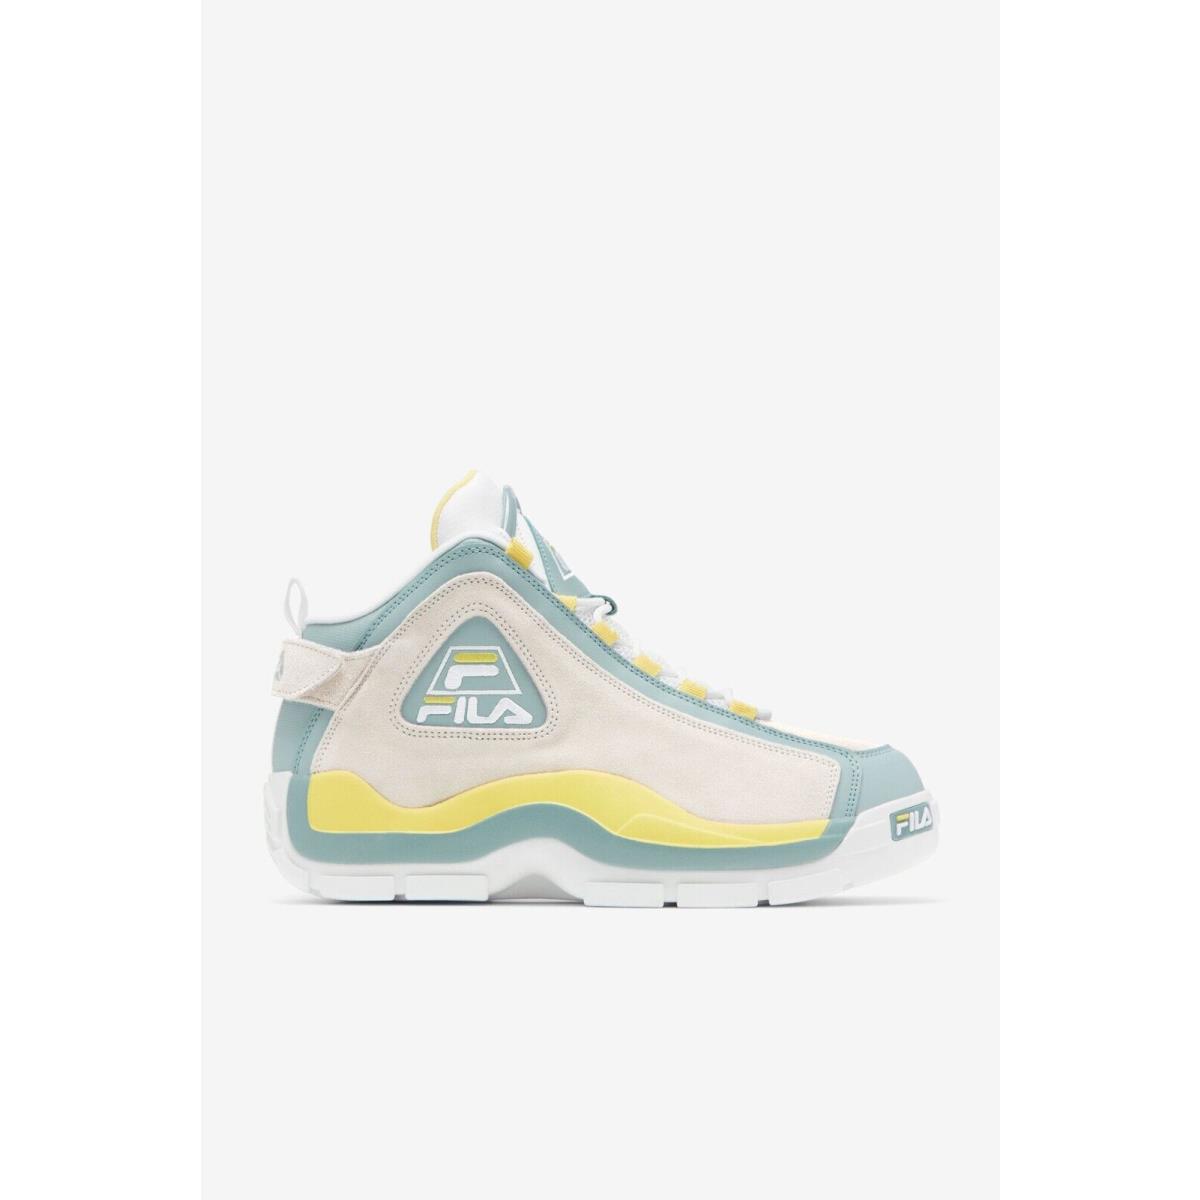 Fila Men`s Grant Hill 2 Basketball Shoes White / Egret / Gray Mist (101)